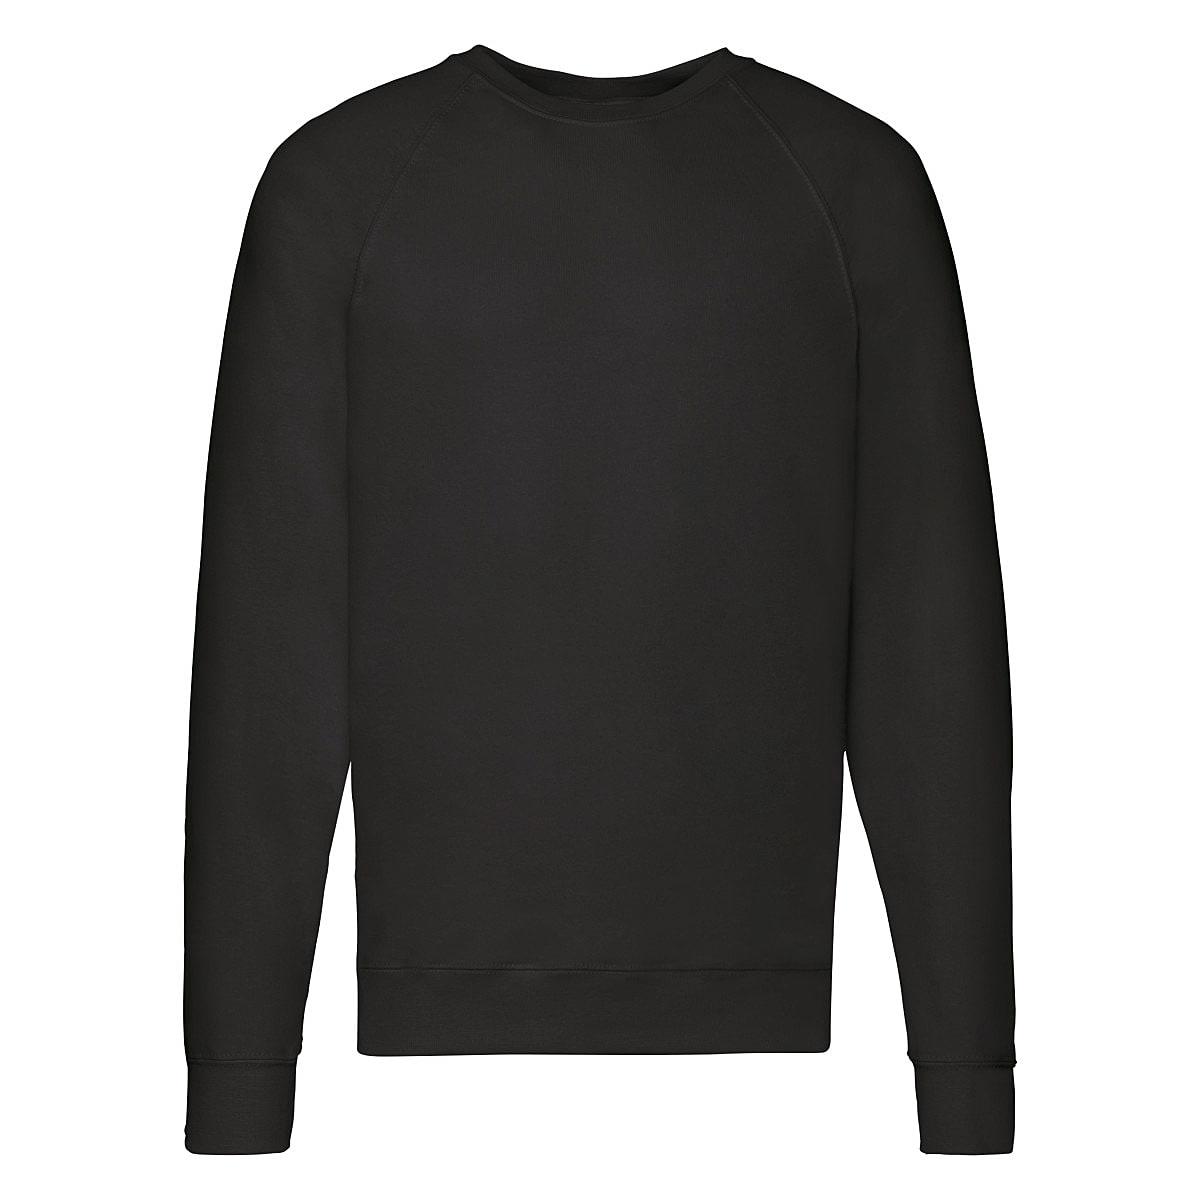 Fruit Of The Loom Mens Lightweight Raglan Sweater in Black (Product Code: 62138)